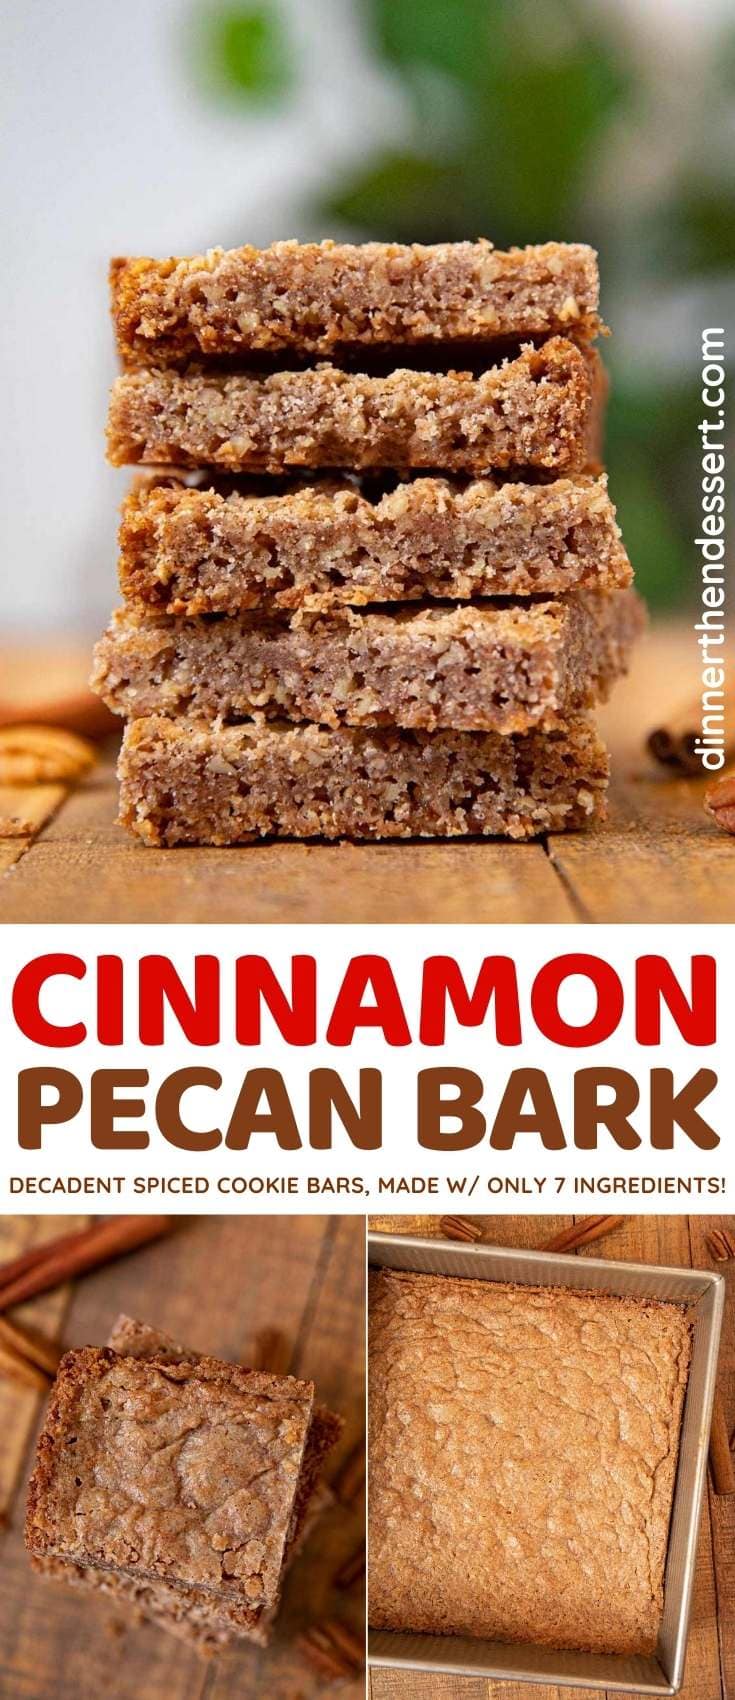 Cinnamon Pecan Bark collage